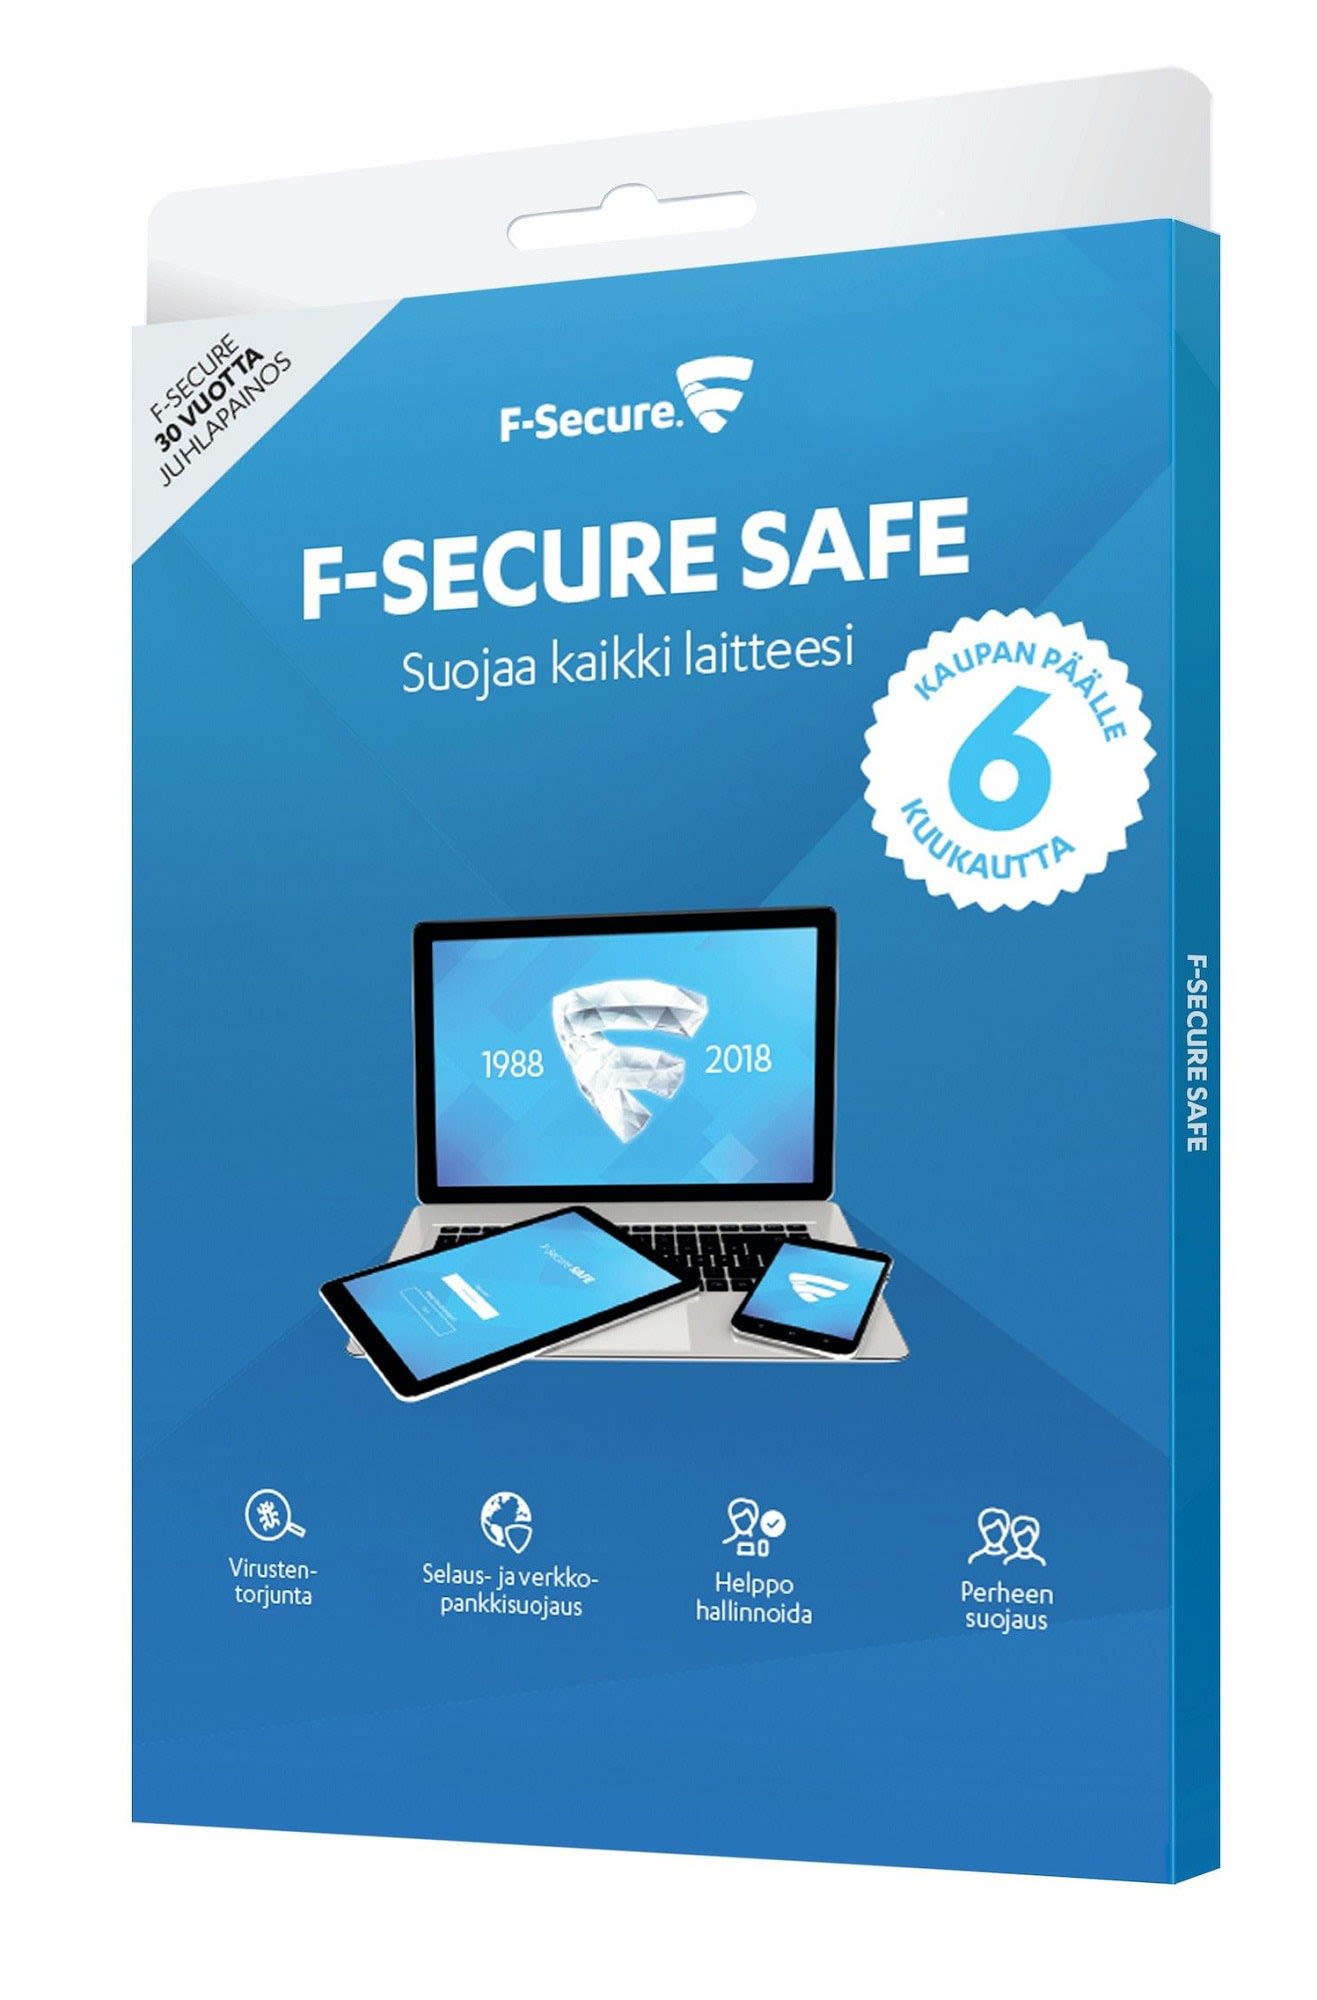 is f secure safe